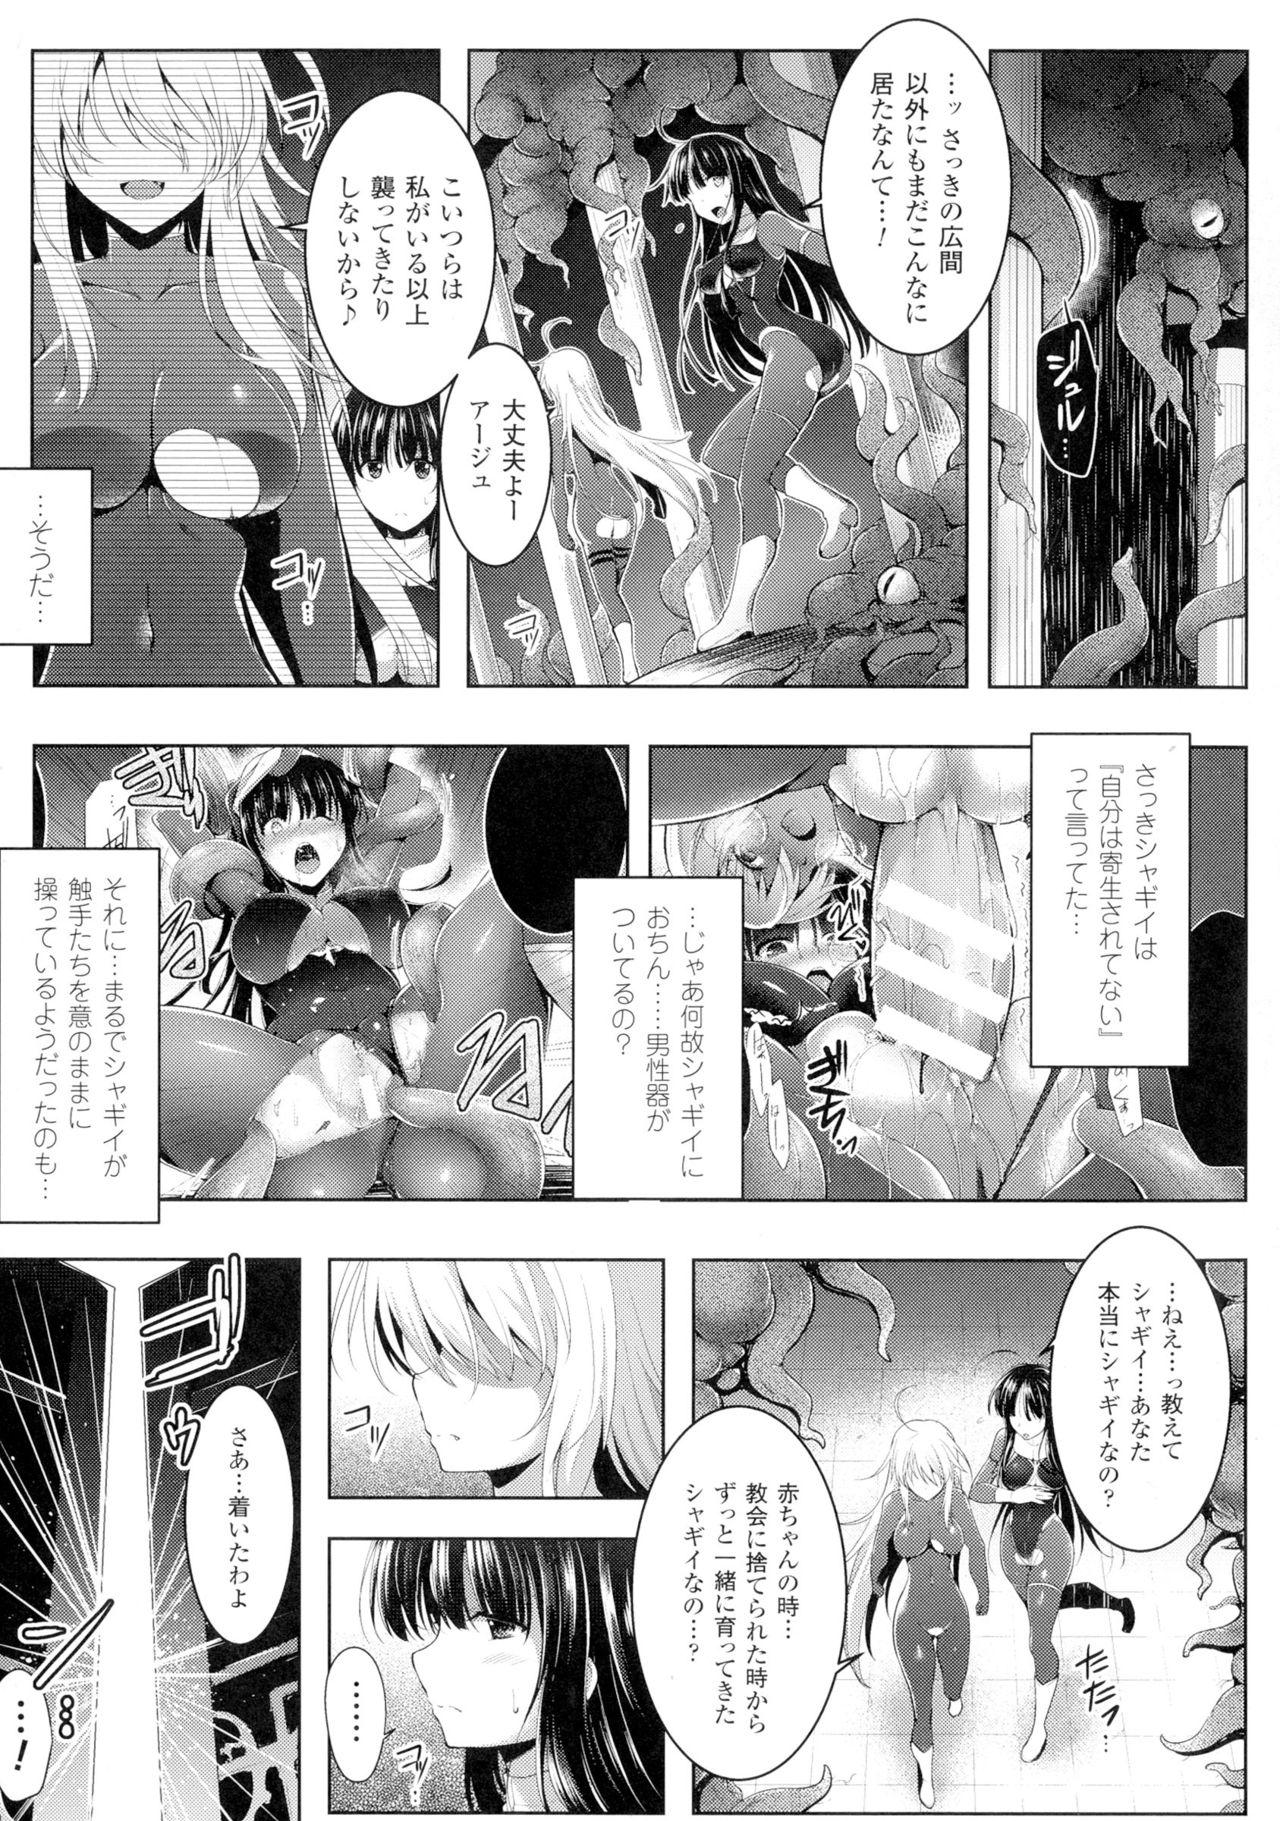 Seigi no Heroine Kangoku File DX Vol. 1 93